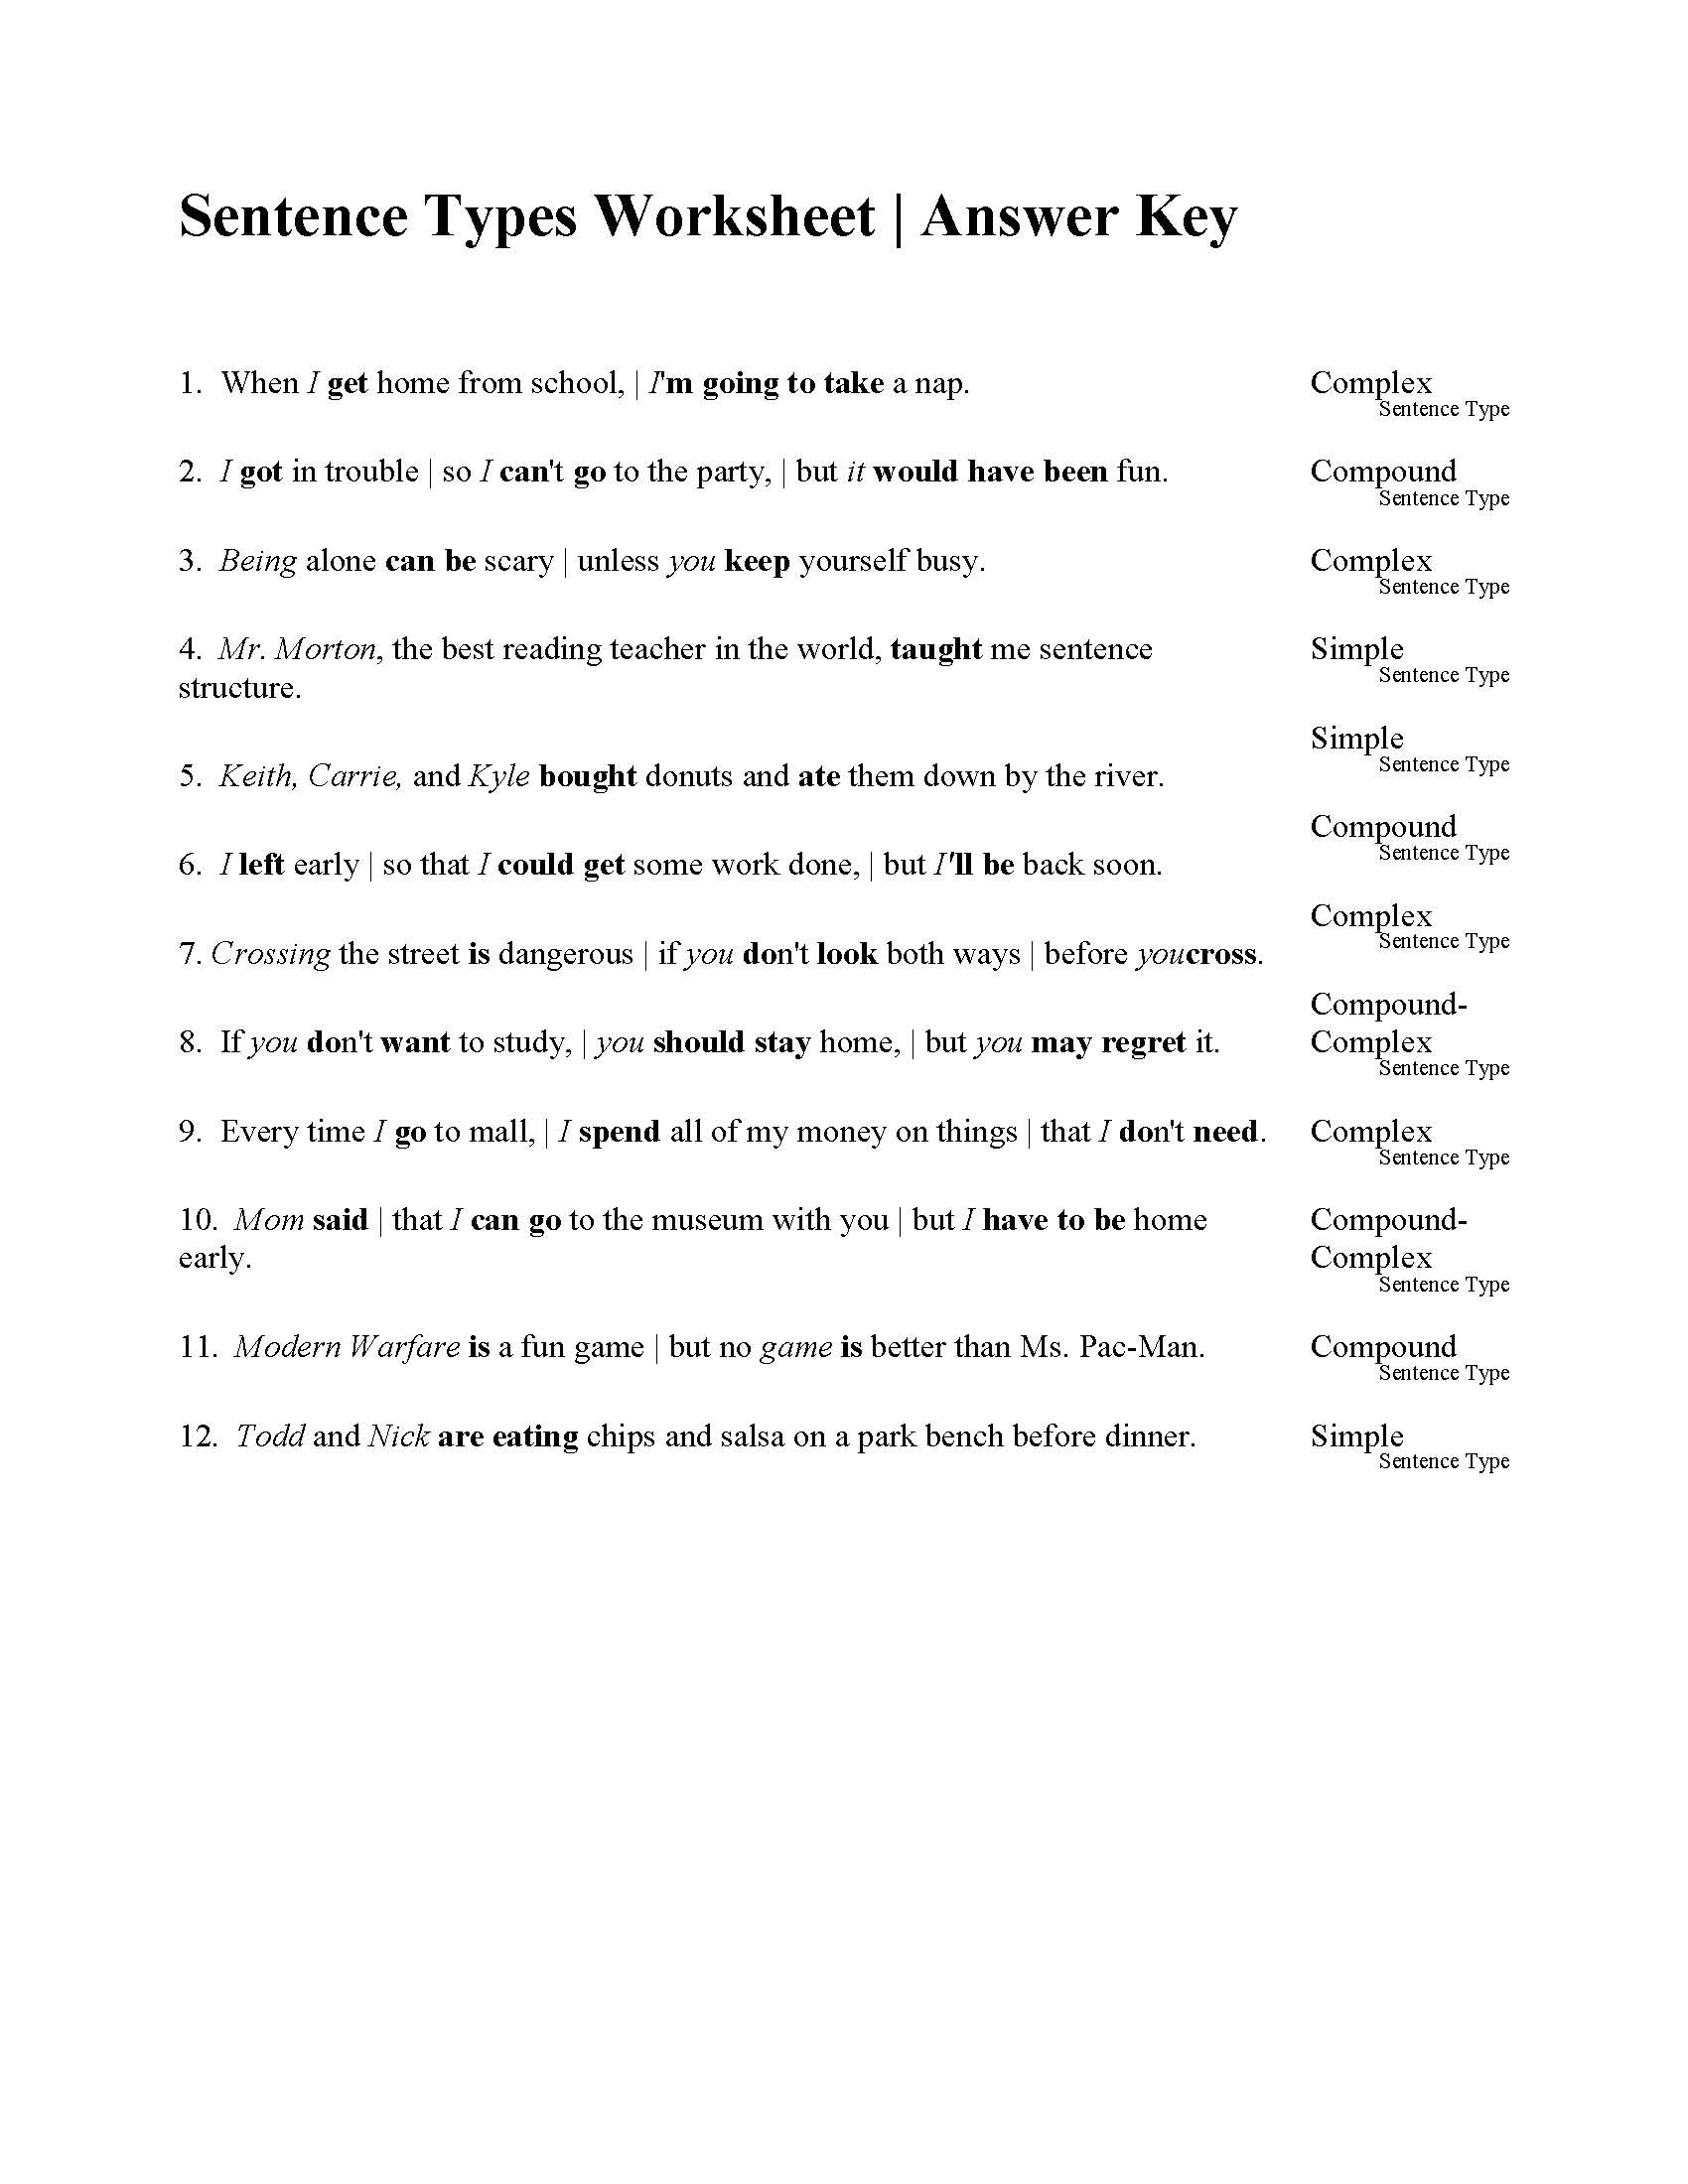 Compound and Complex Sentences Worksheet Sentences Types Worksheet